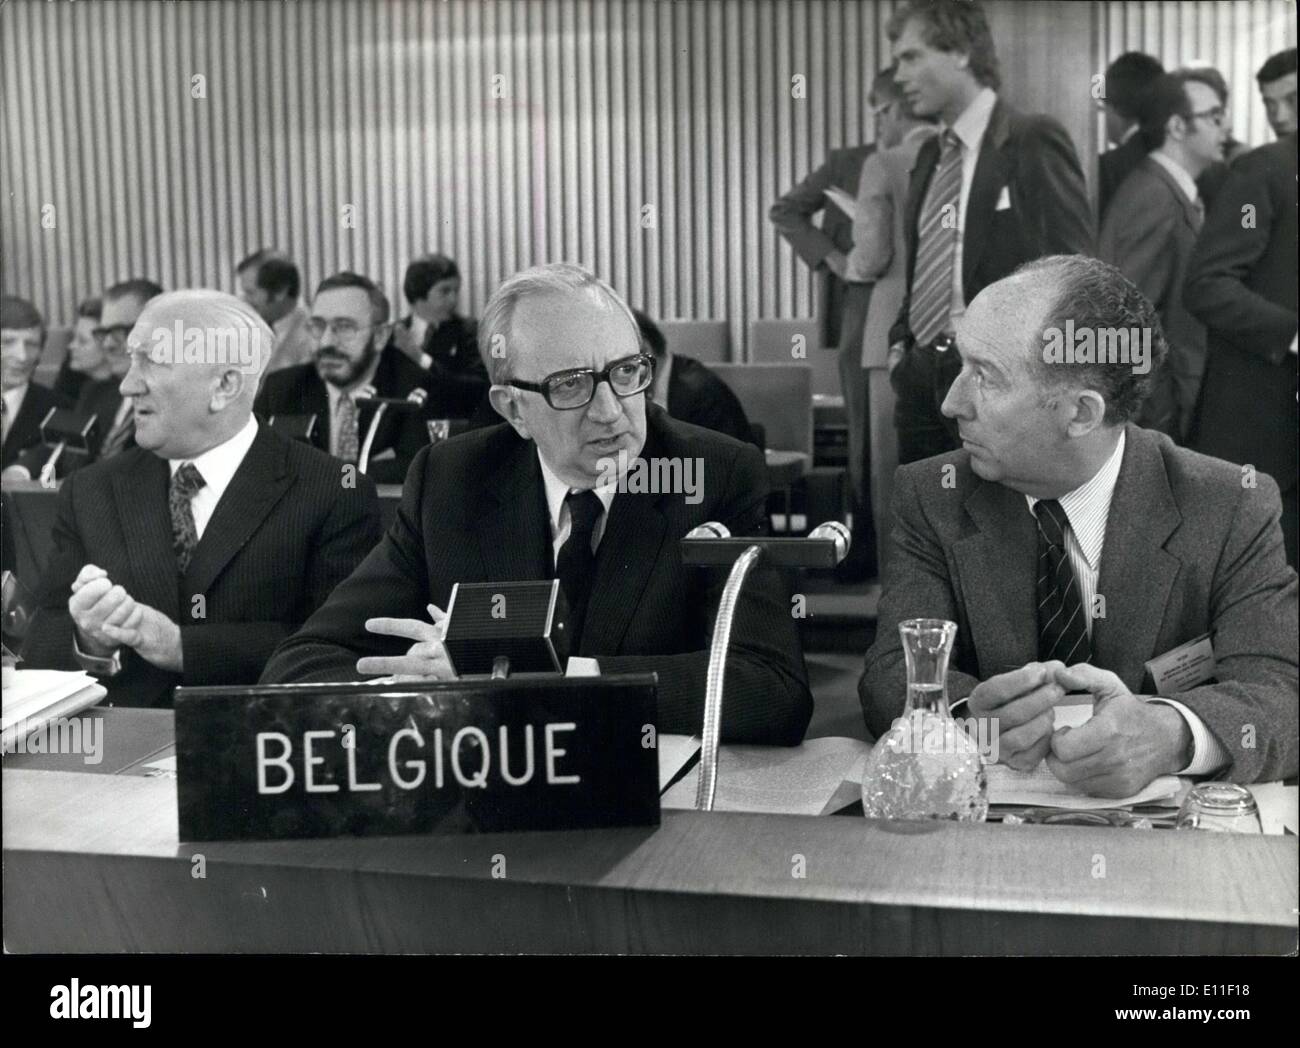 Giugno 24, 1977 - O.E.C.D. Conferenza: Henri SIMONET, Lonnoy e Groothaert Foto Stock